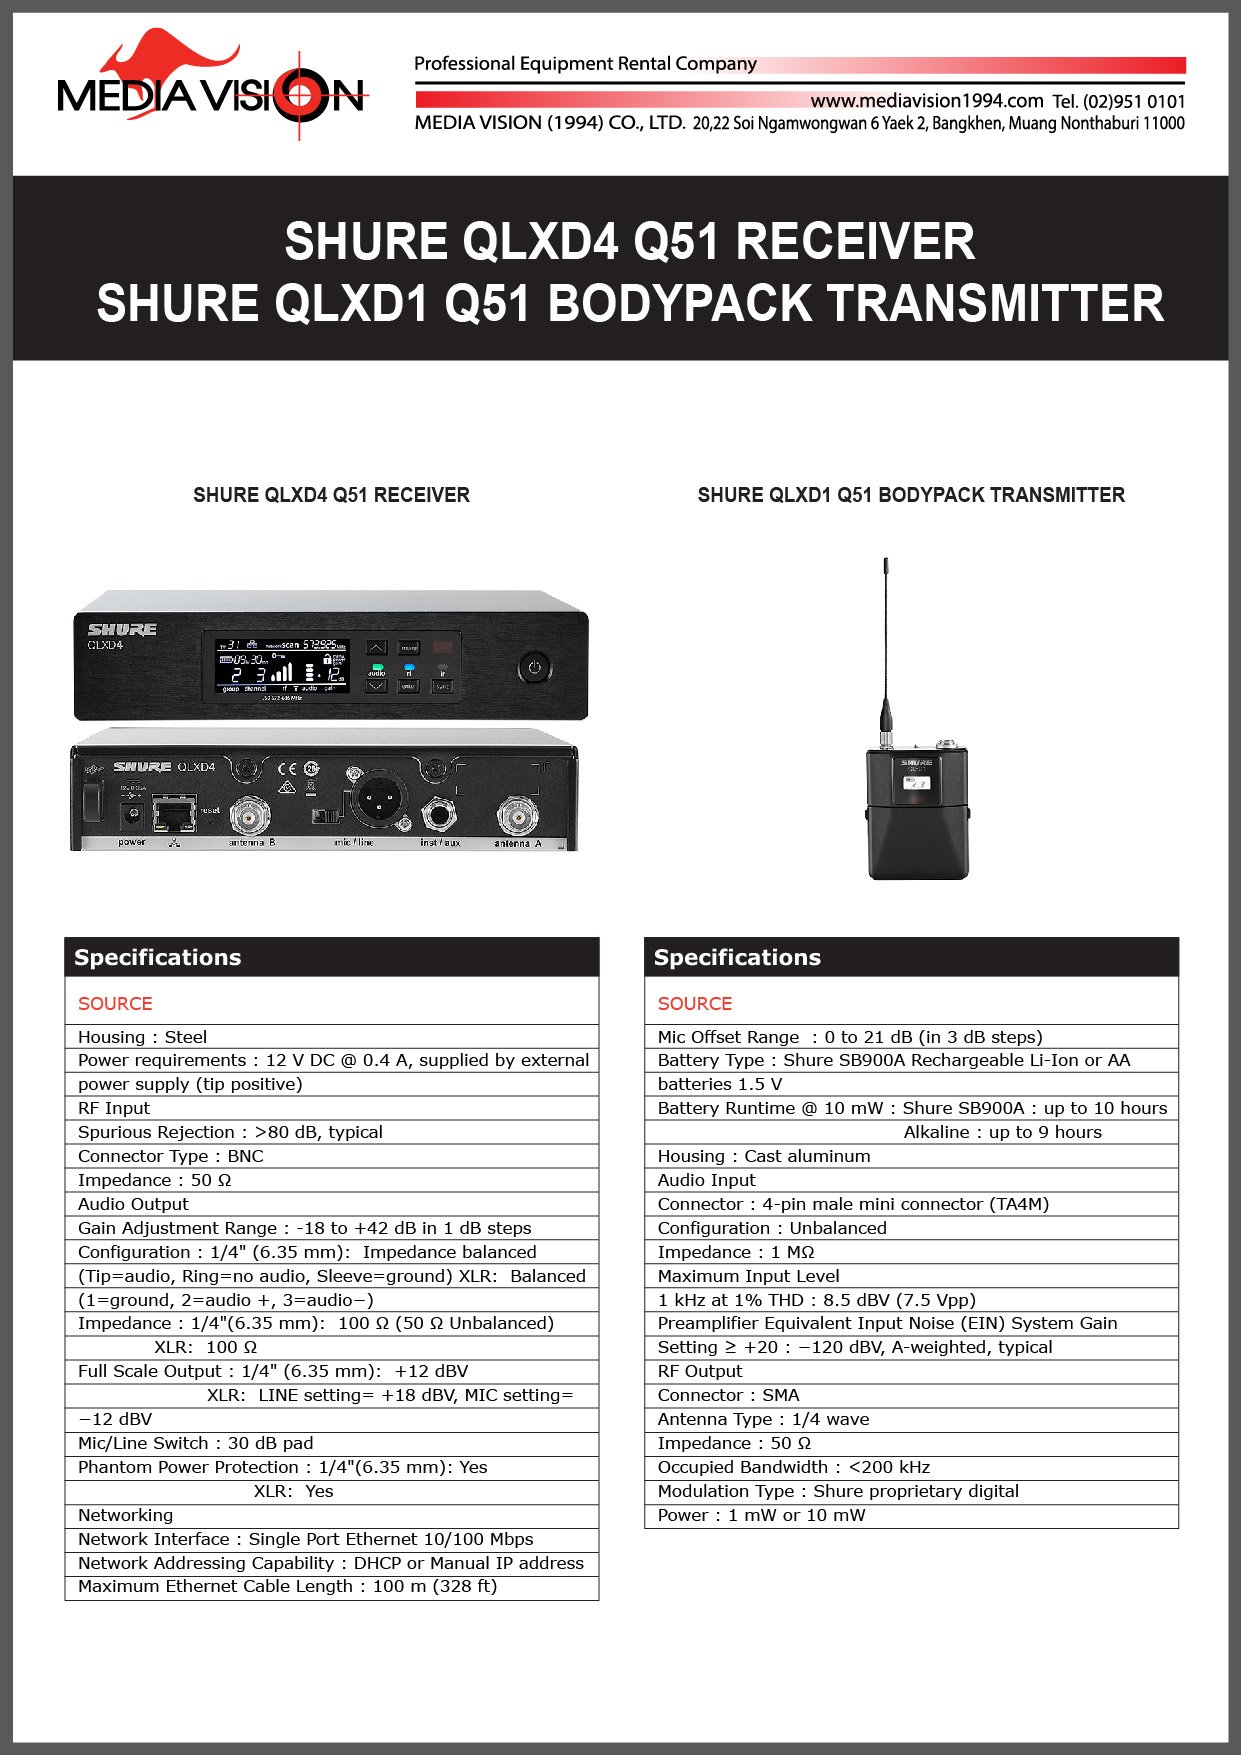 SHURE QLXD4 Q51 RECEIVER, SHURE QLXD1 Q51 BODYPACK TRANSMITTER